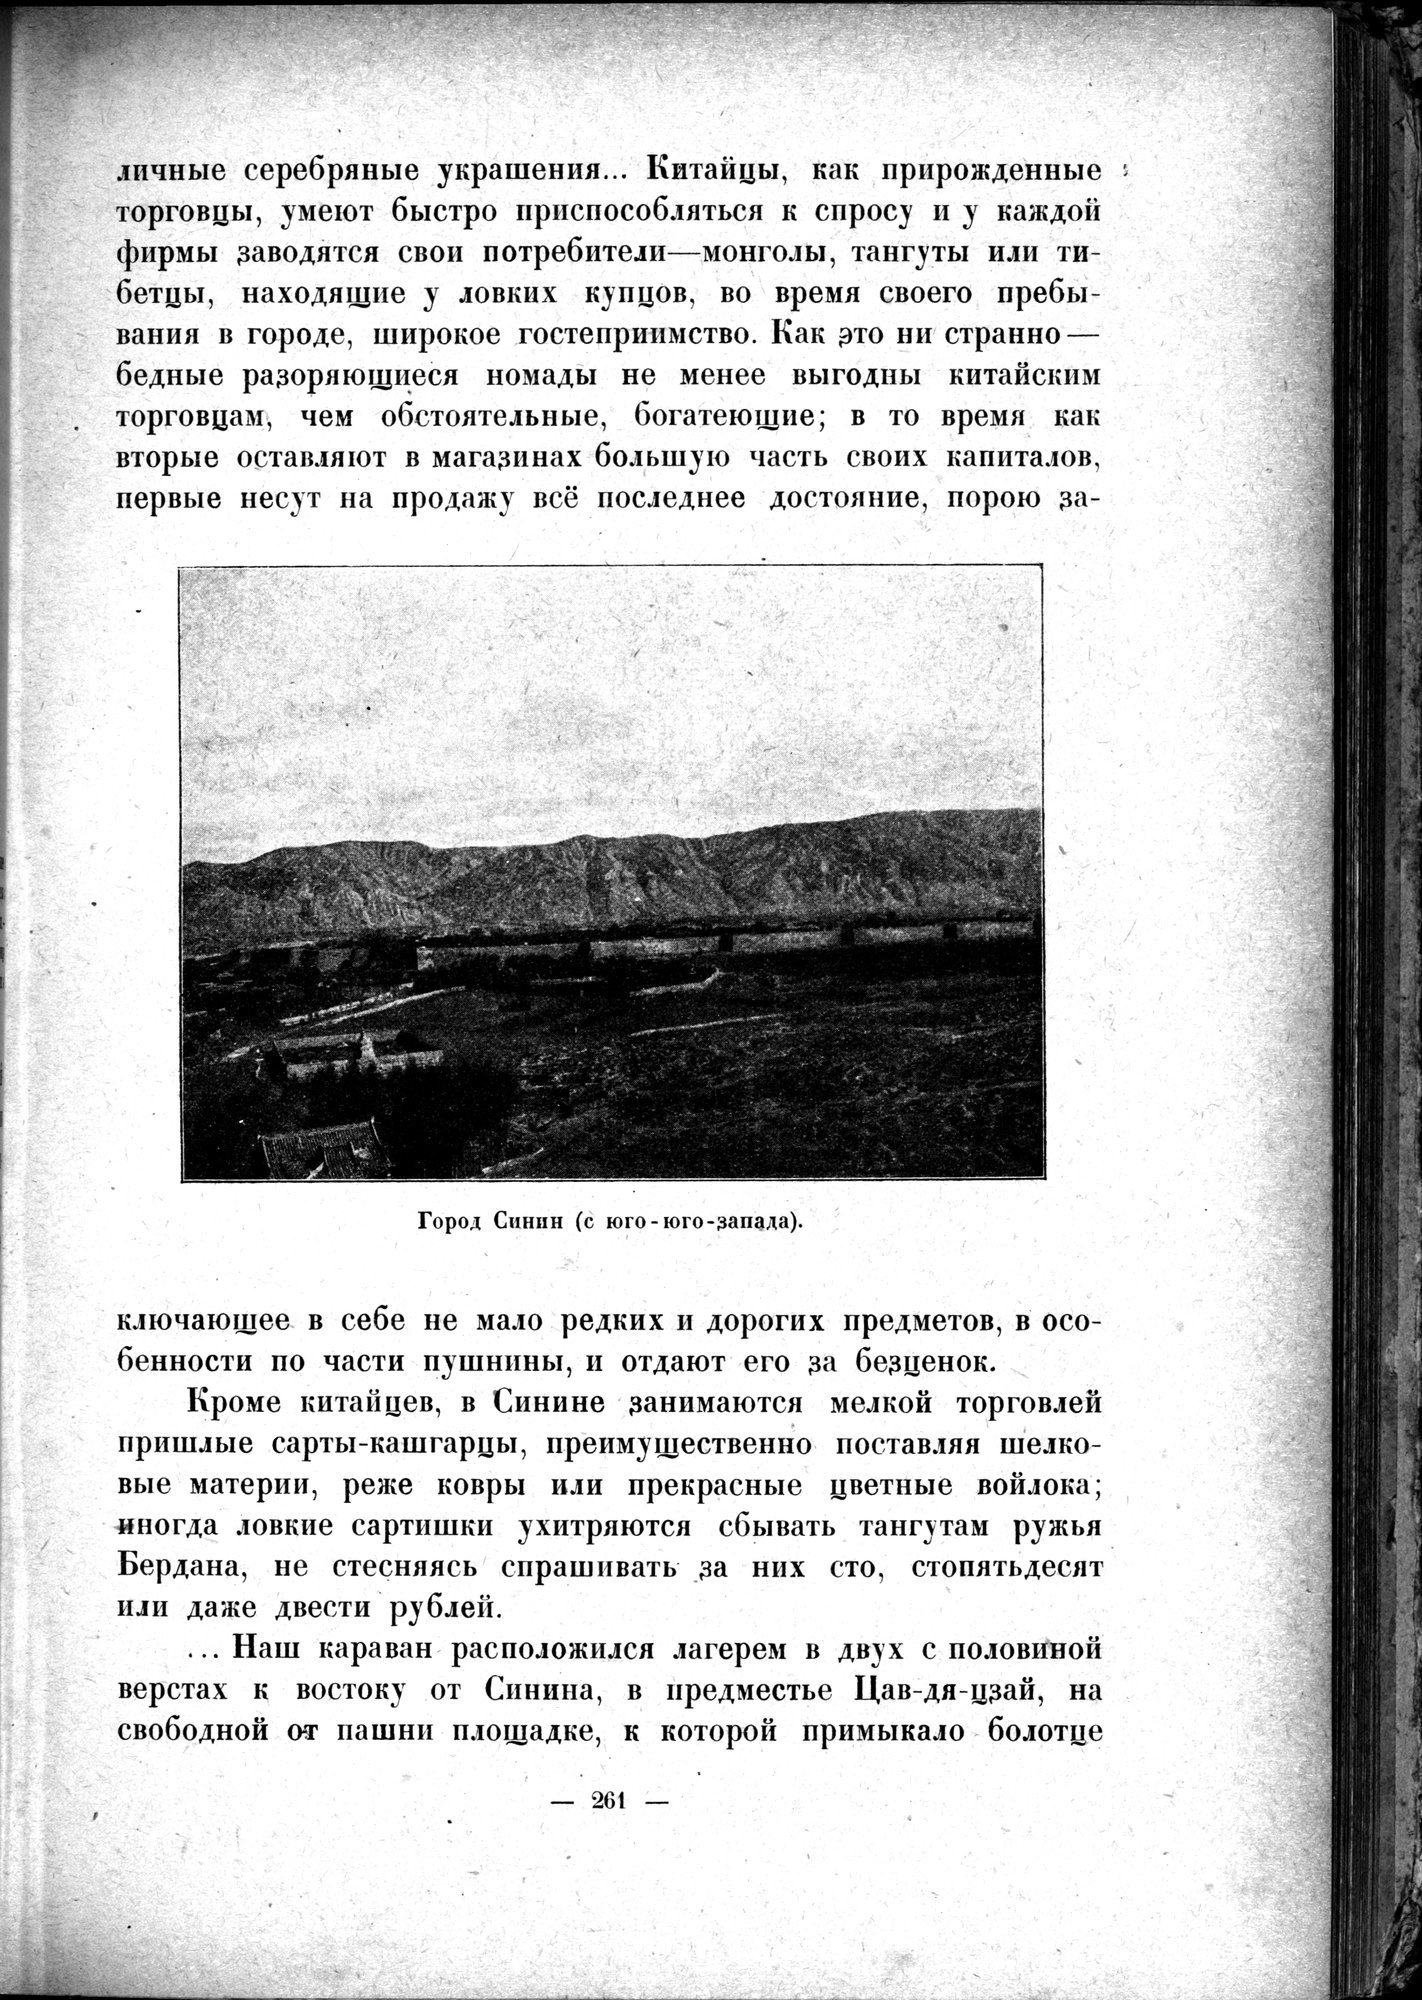 Mongoliya i Amdo i mertby gorod Khara-Khoto : vol.1 / Page 307 (Grayscale High Resolution Image)